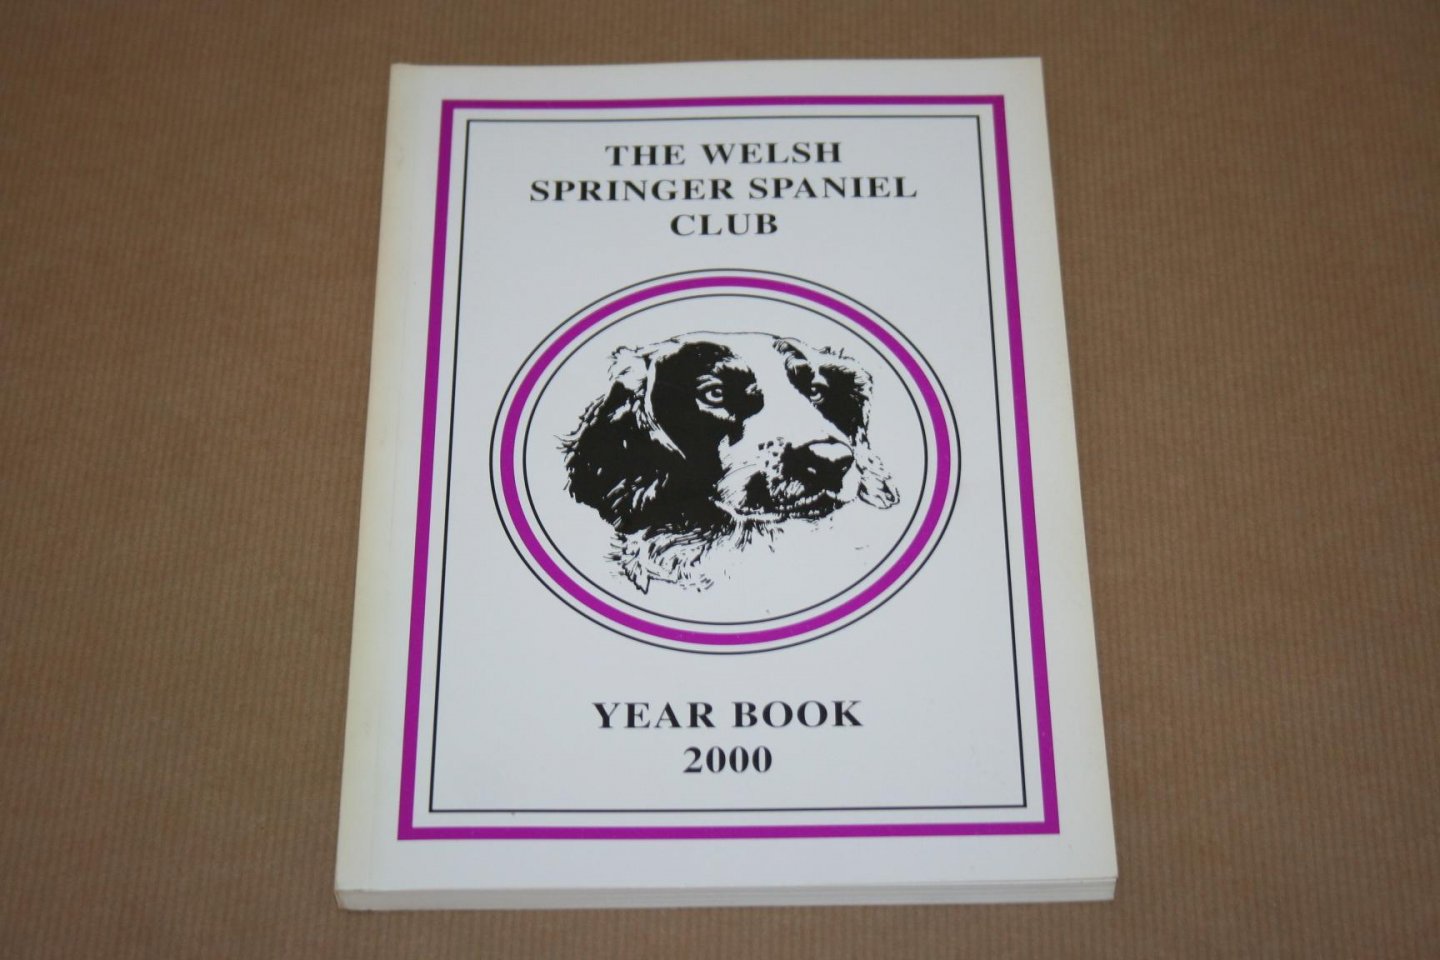  - The Welsh Springer Spaniel Club Year Book - 2000